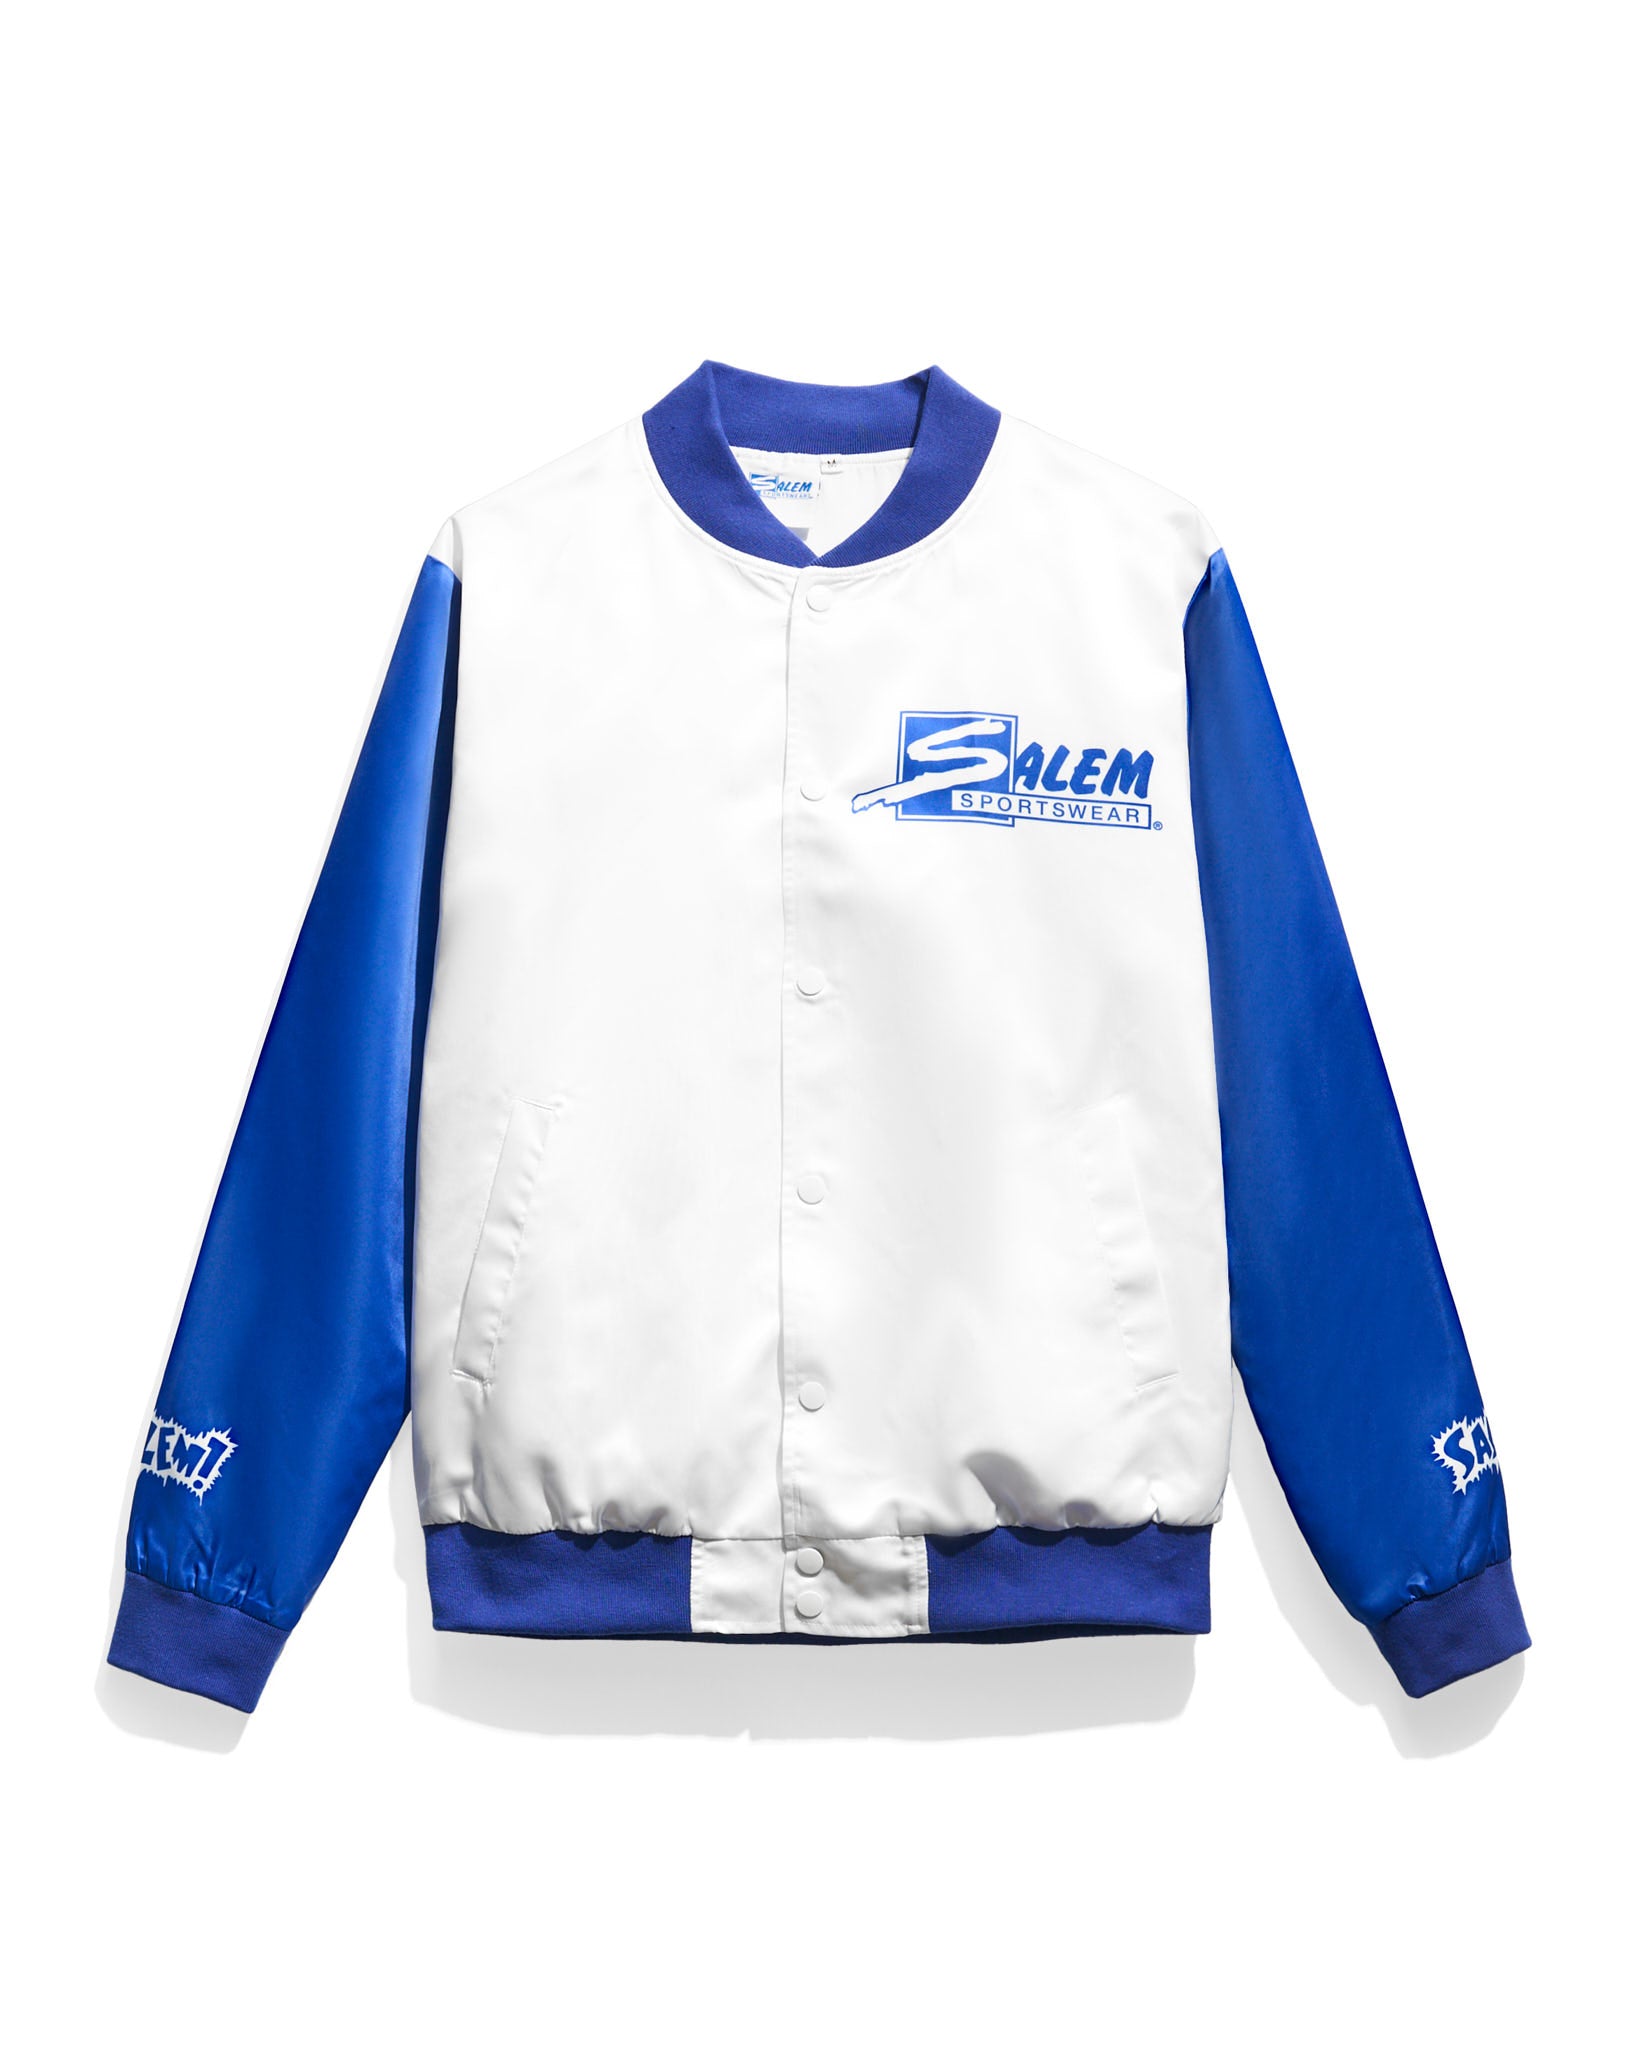 Salem Sportswear Satin Jacket